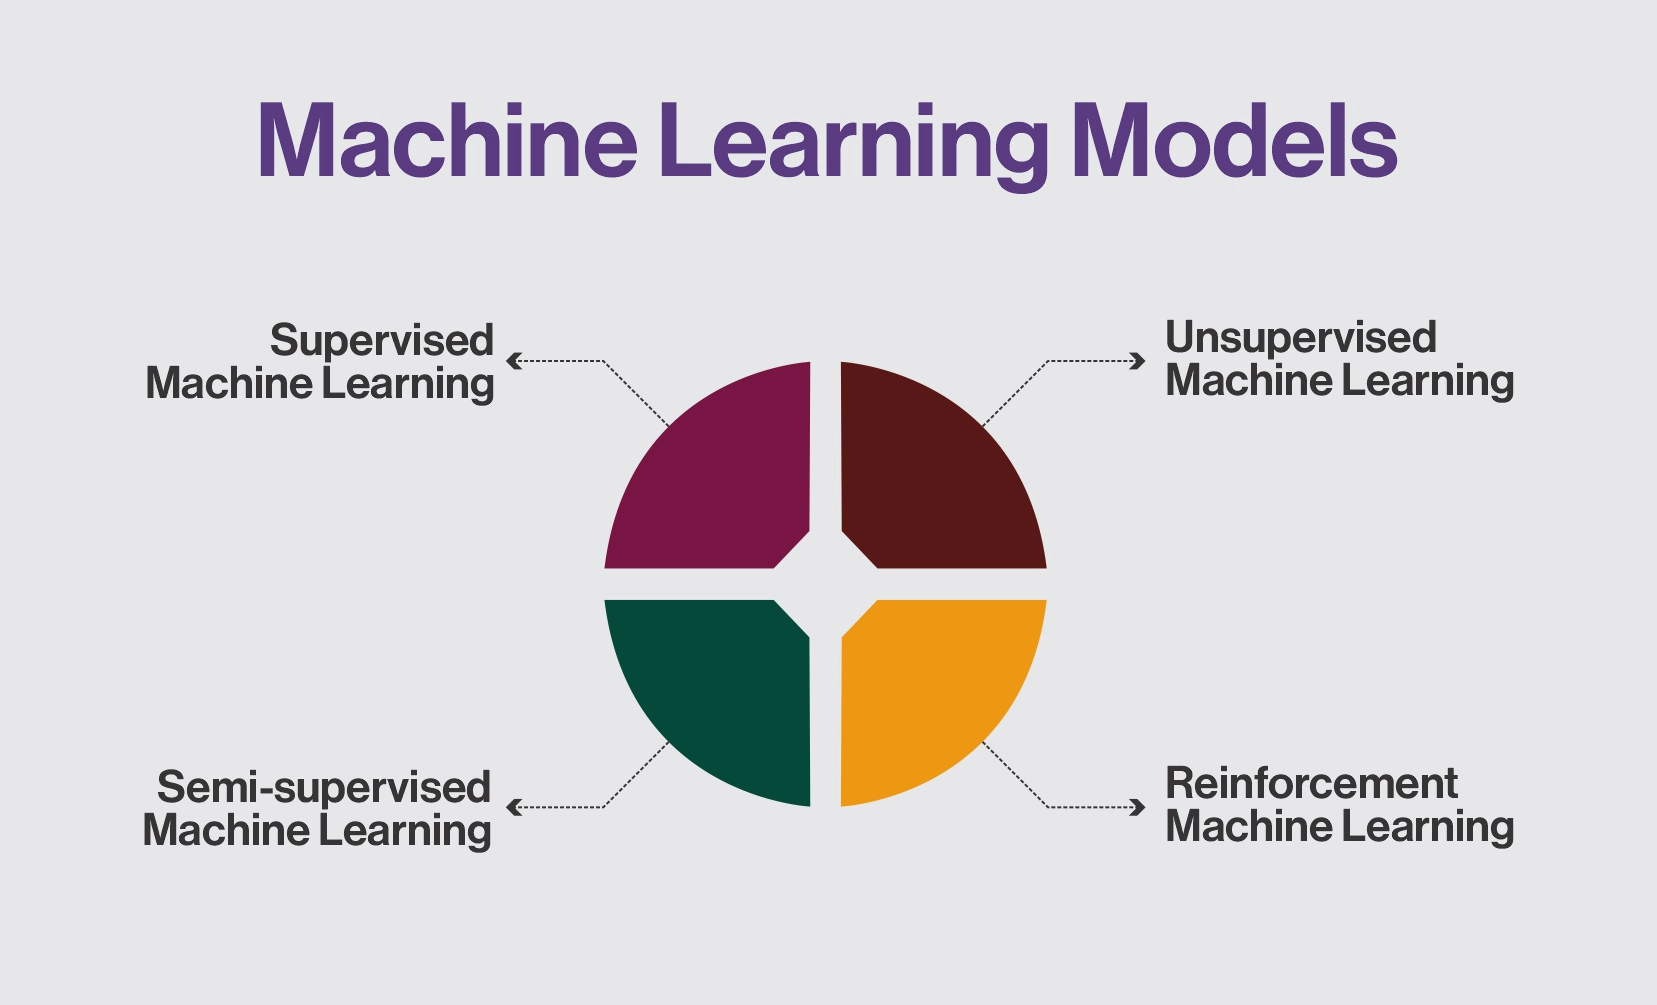 Data Science Vs Machine Learning